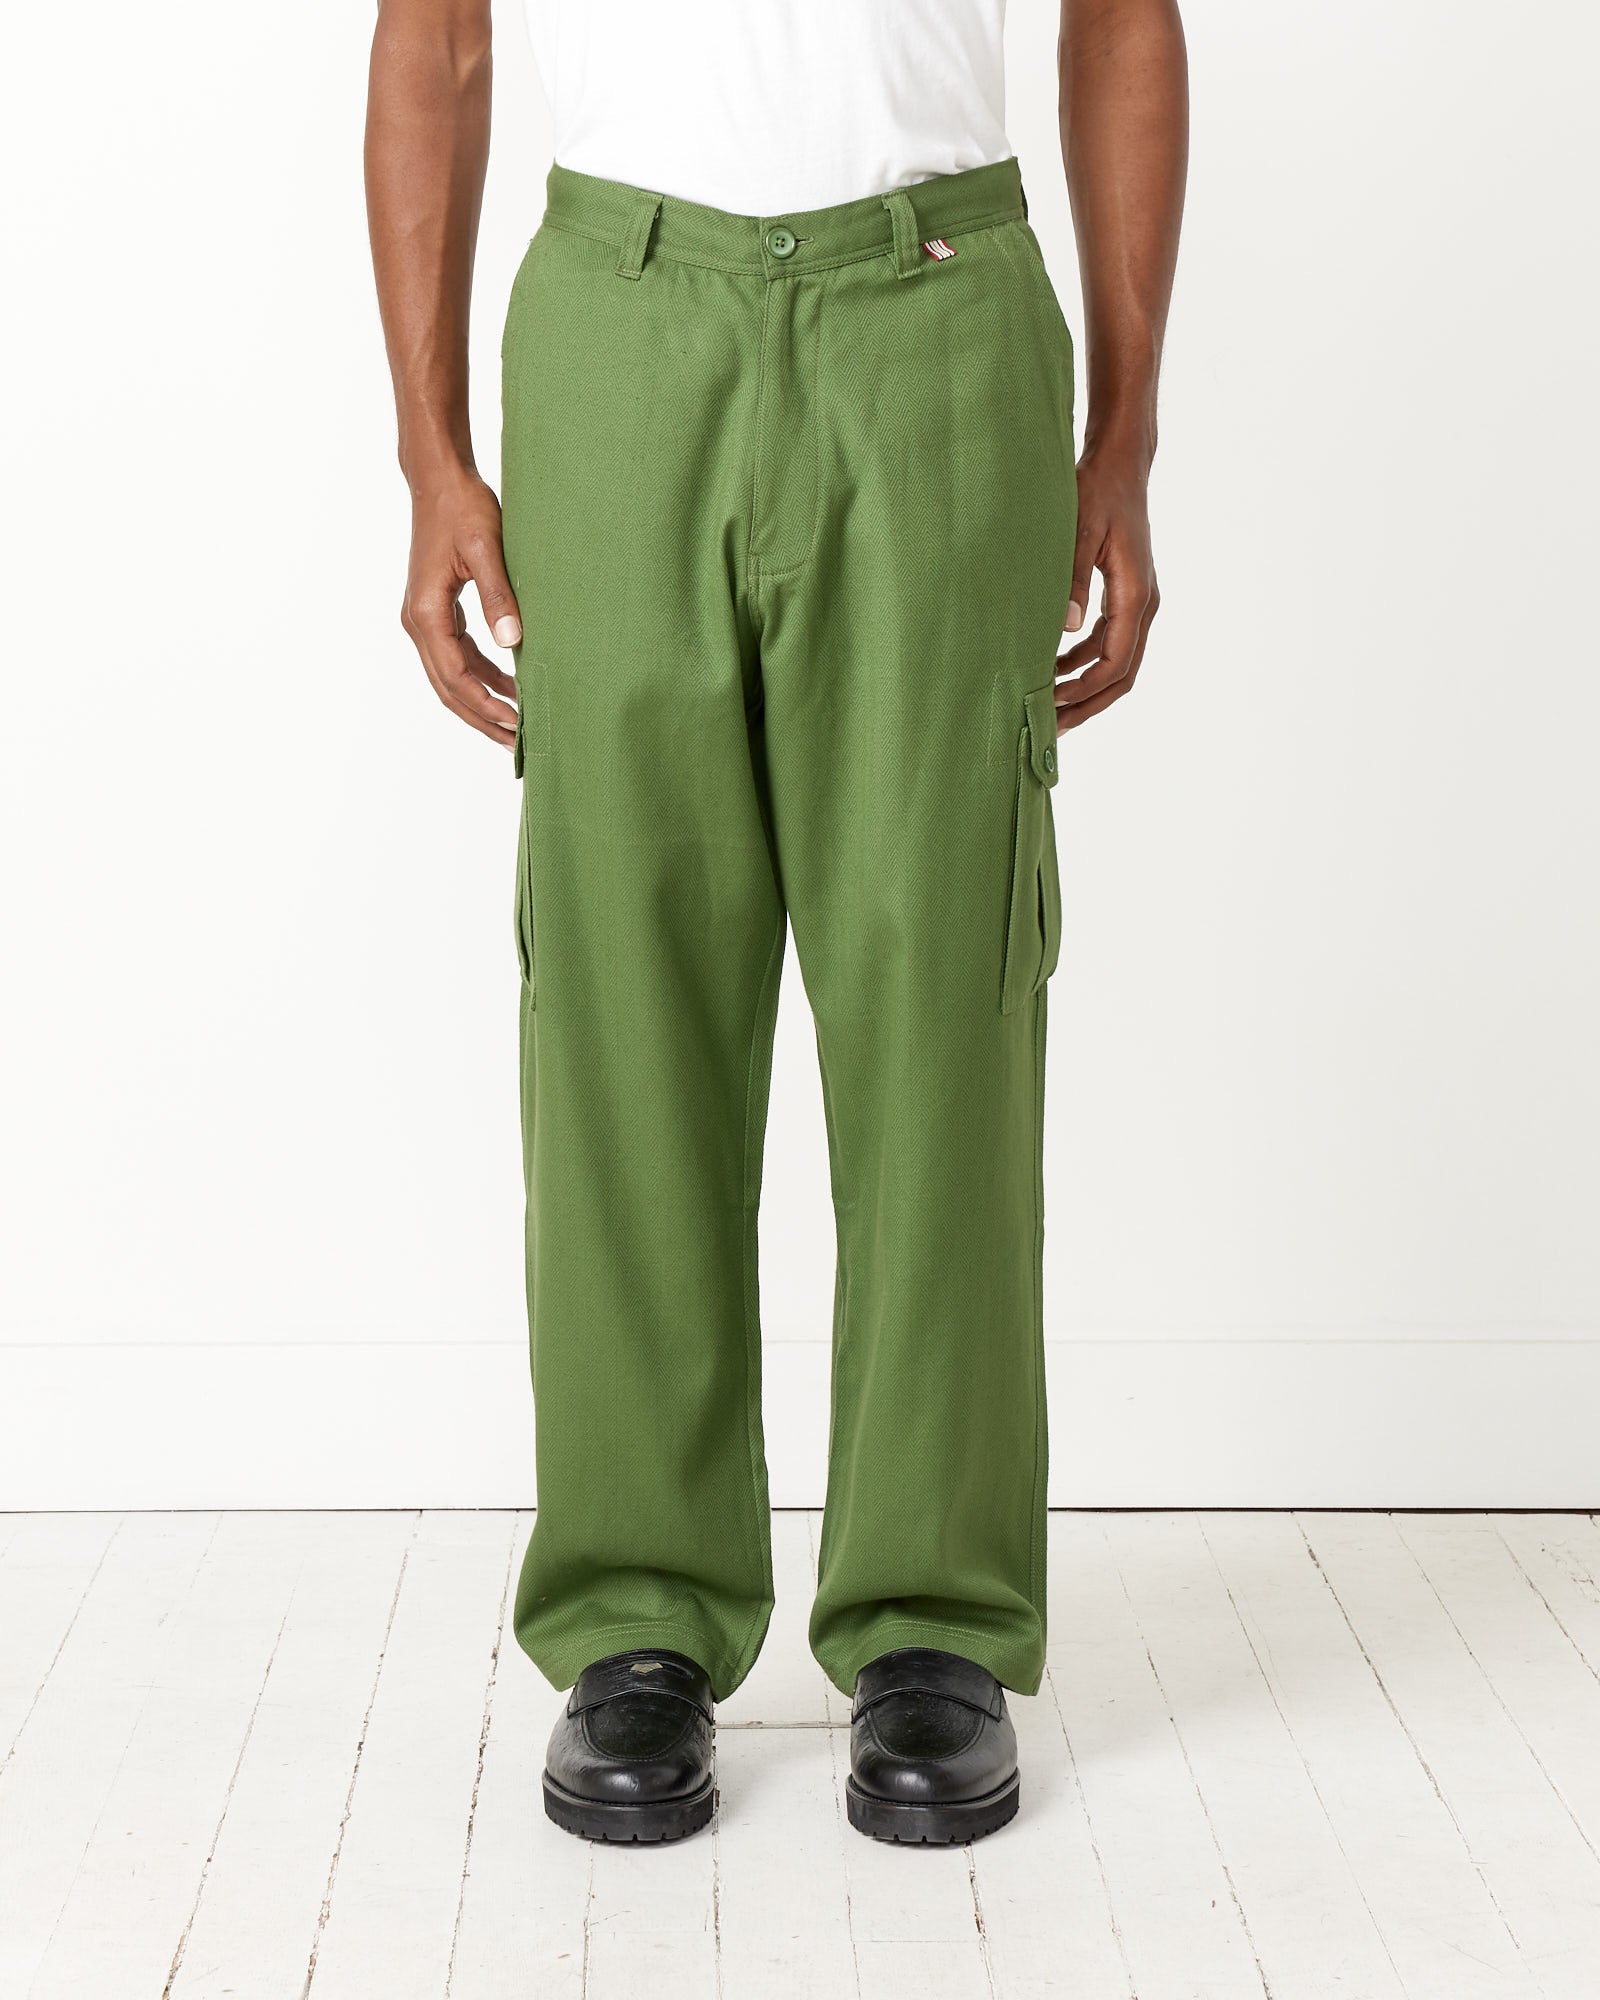 Merrell, Pants & Jumpsuits, Womens Merrell Khaki Green Capri Pants Size